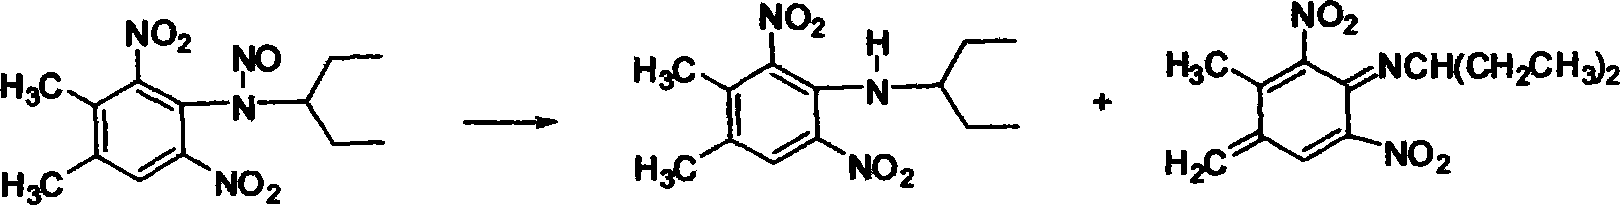 Process for removing N-nitroso-pendimethalin from pendimethialin